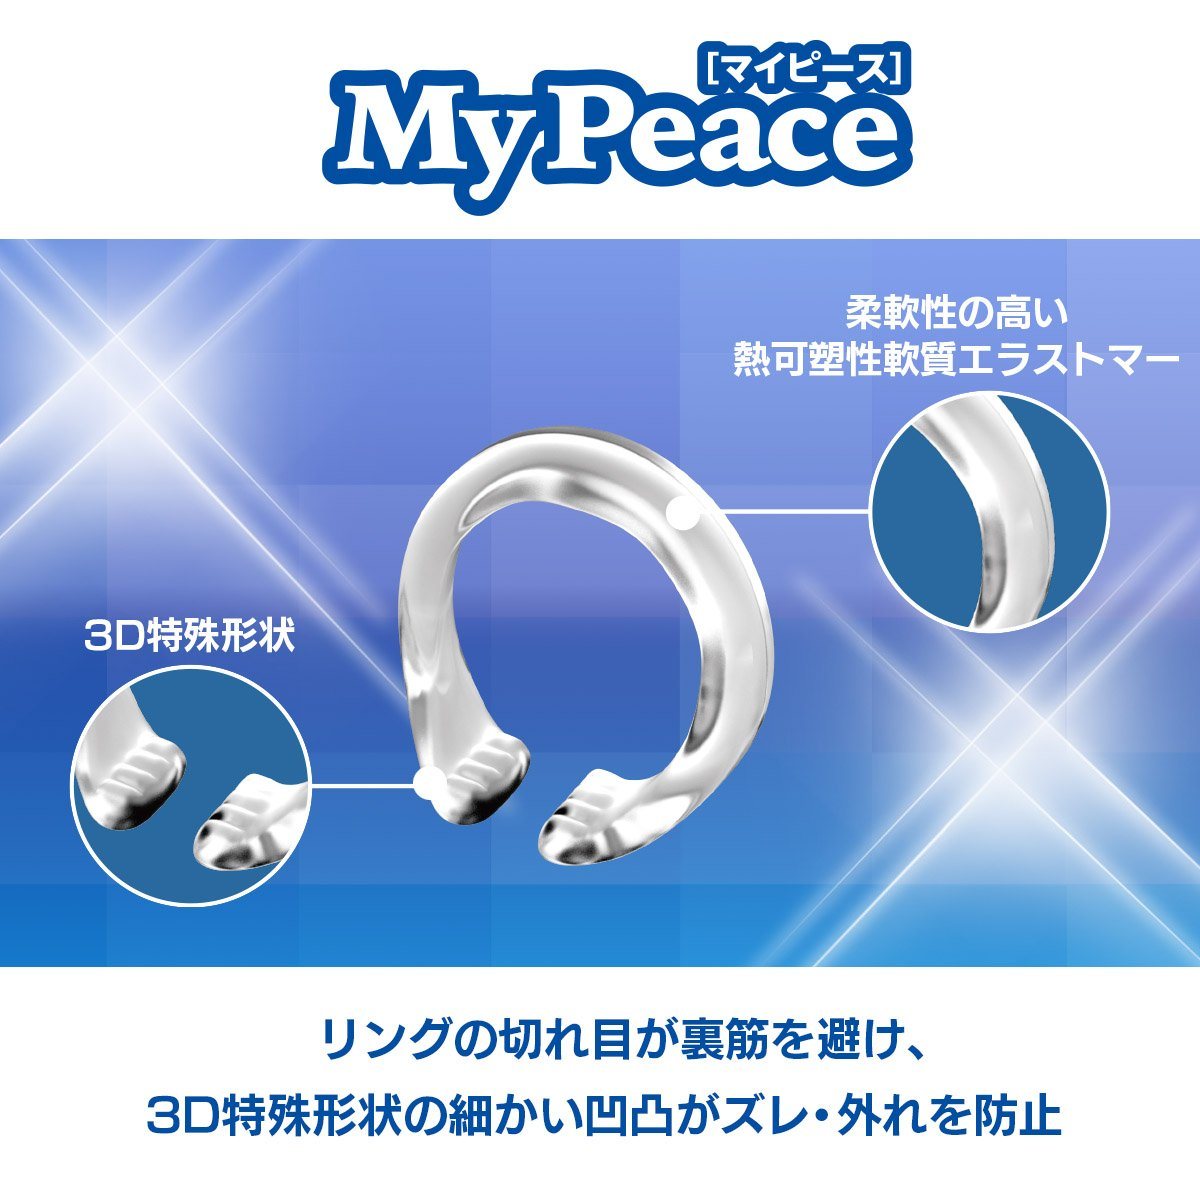 SSI JAPAN My Peace 日用標準版包莖矯正環 包莖矯正環 購買